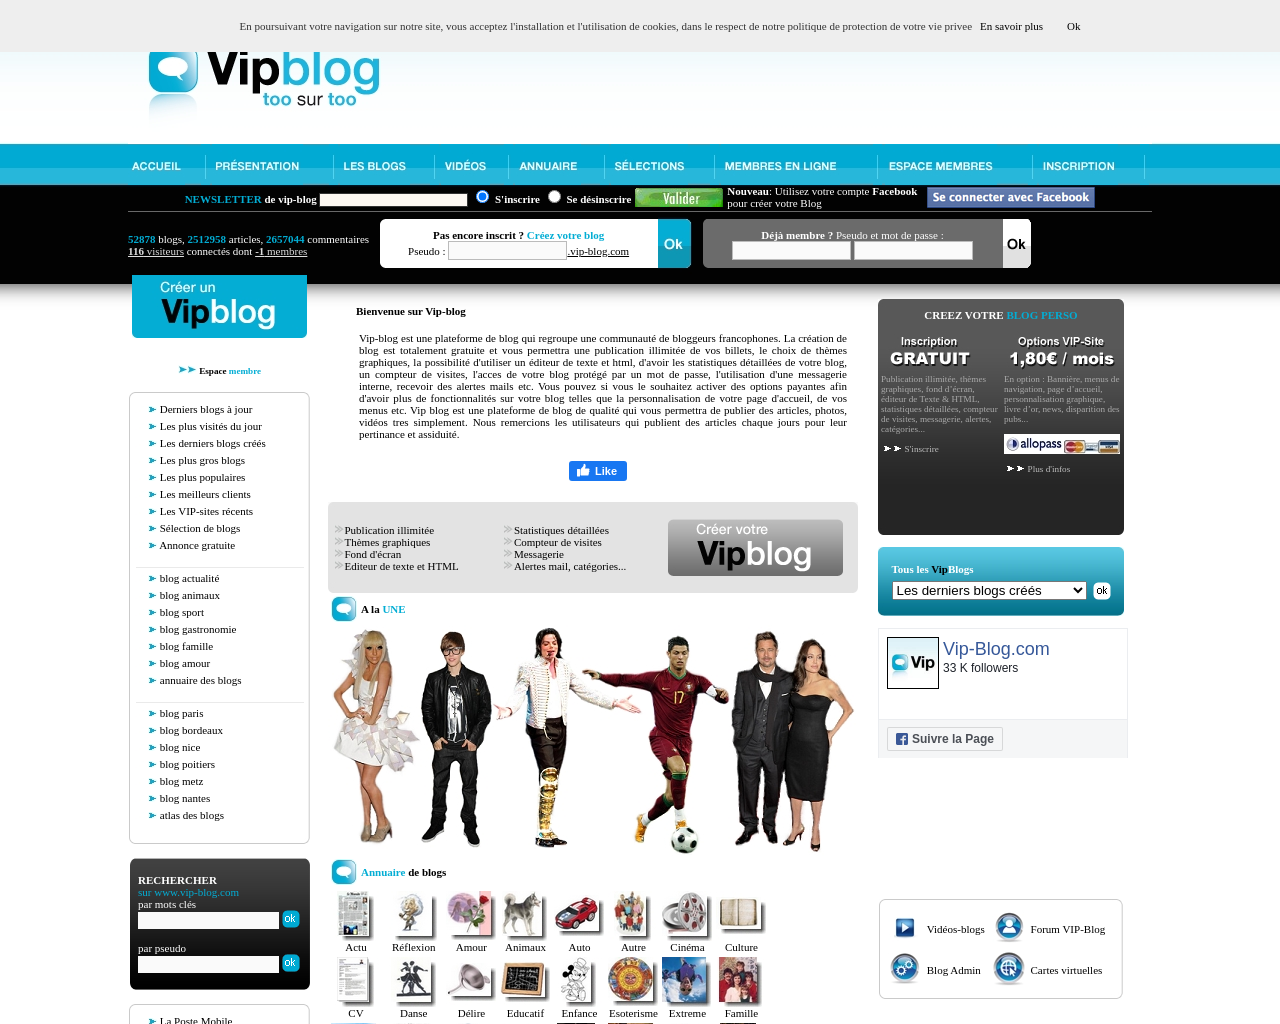 vip-blog.com